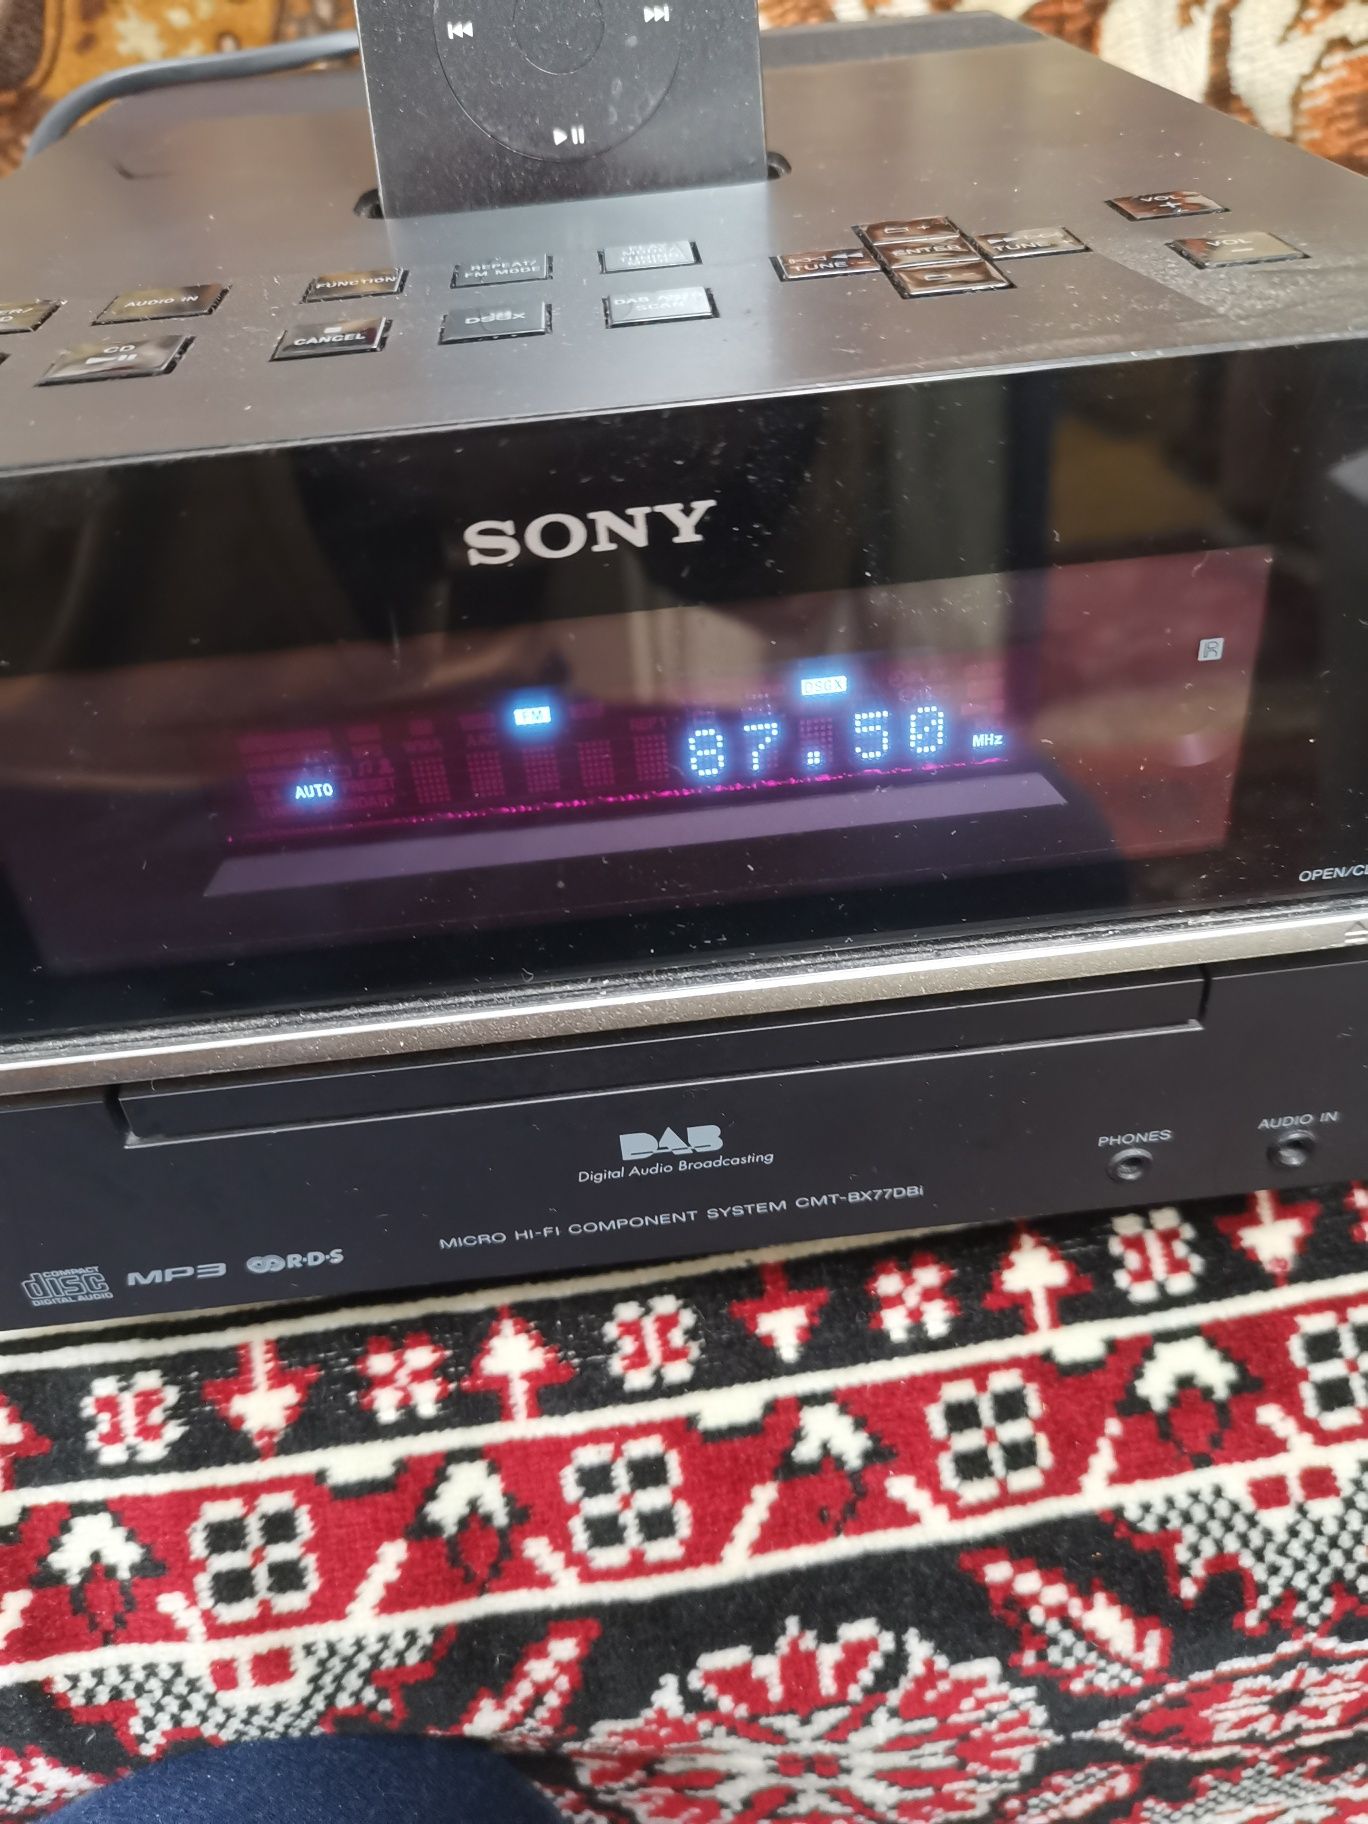 Compact disc Sony Hcd-bx77DBi